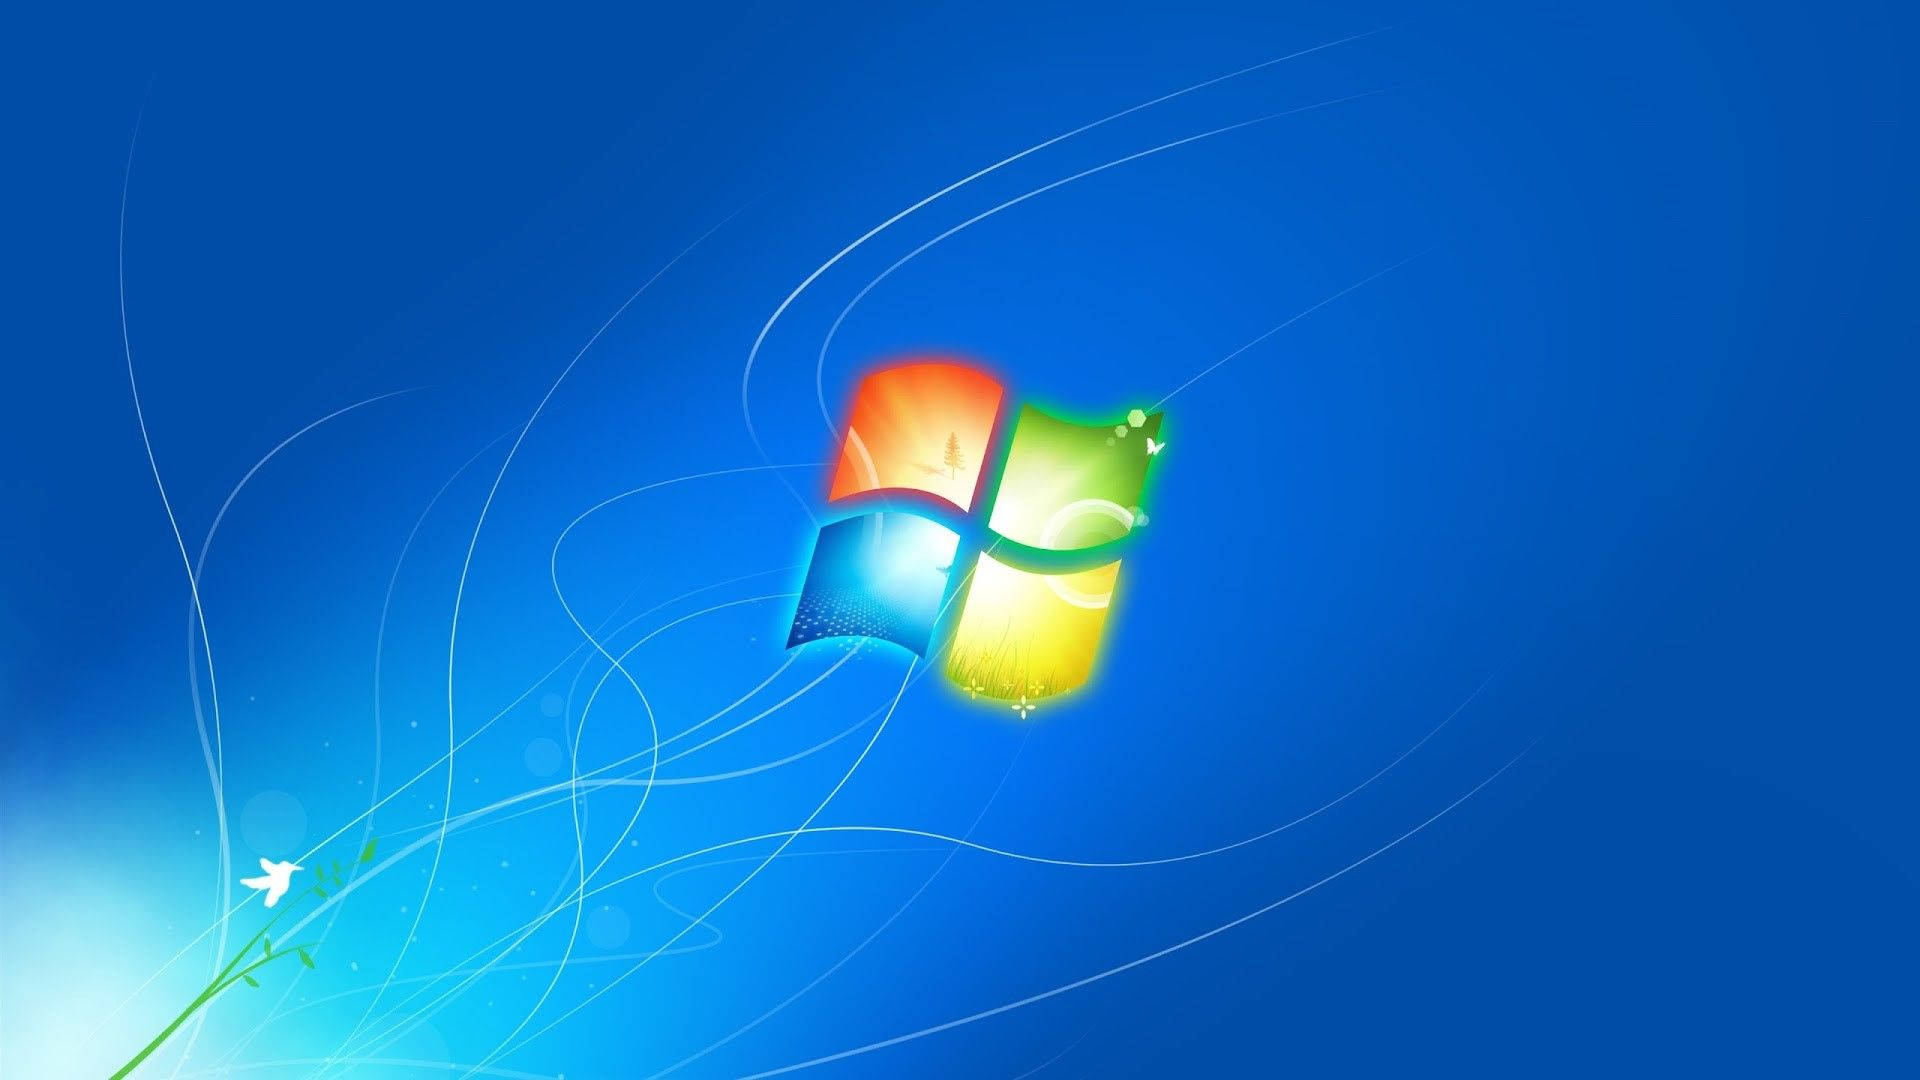 Windows 7 Desktop with a Blue Perspective Wallpaper